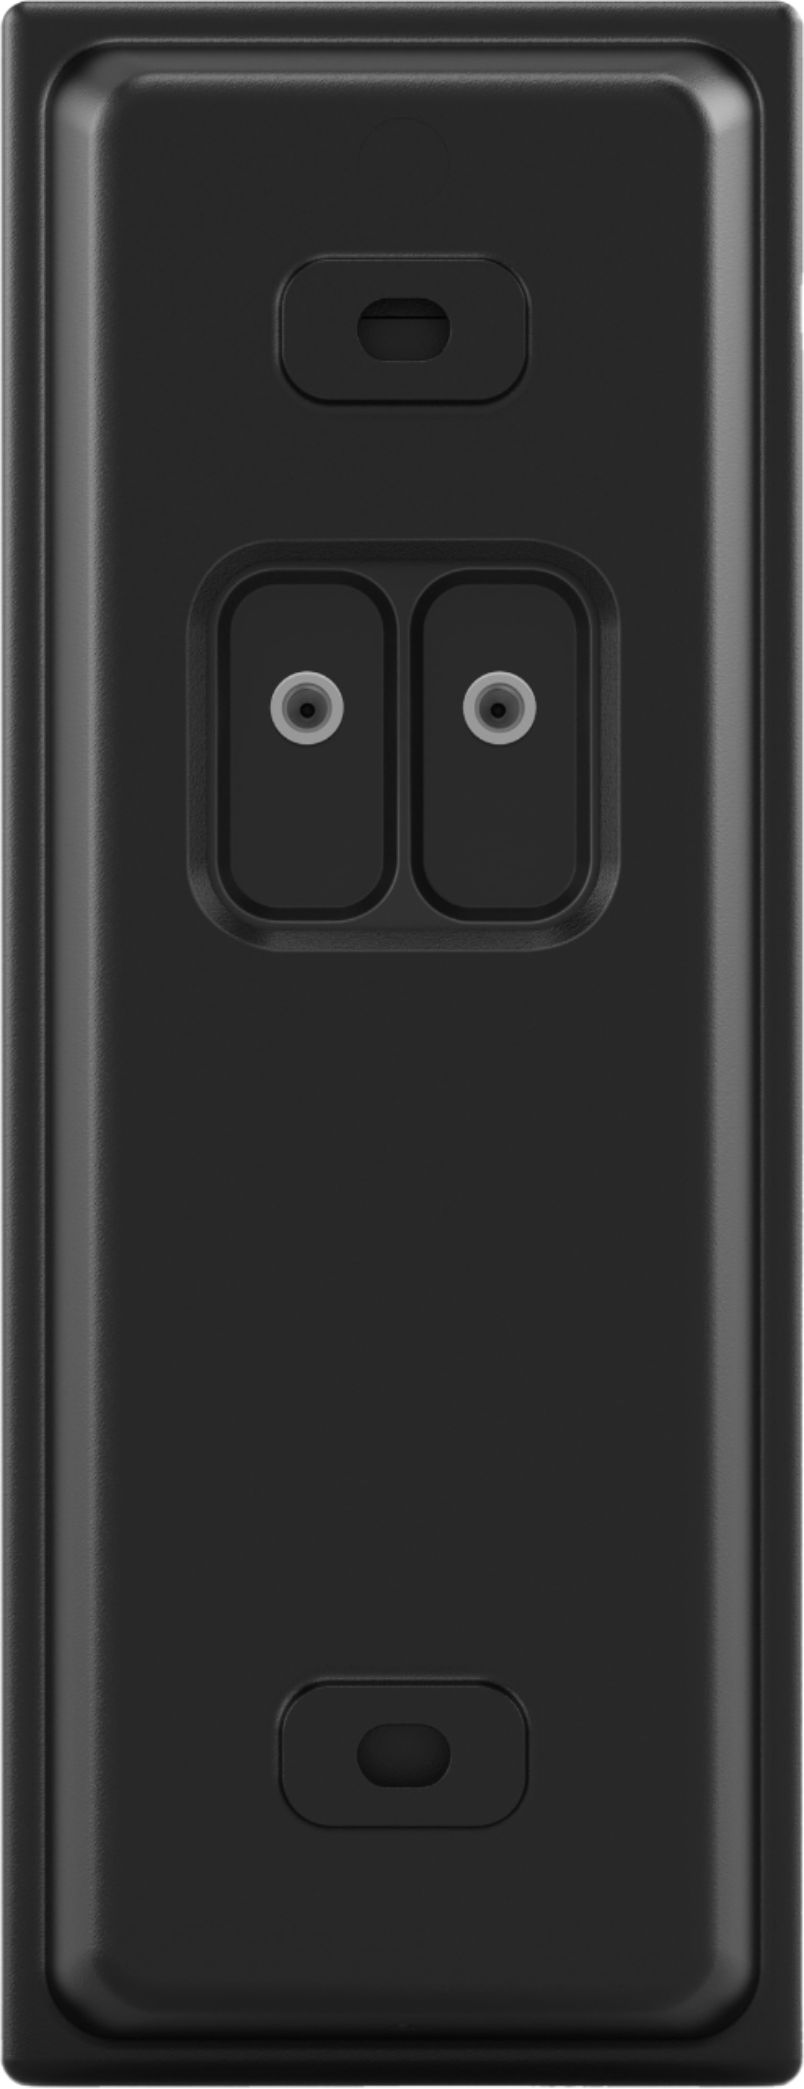 Left View: eufy Security - Smart Wi-Fi Add On Video Doorbell 2K - Black